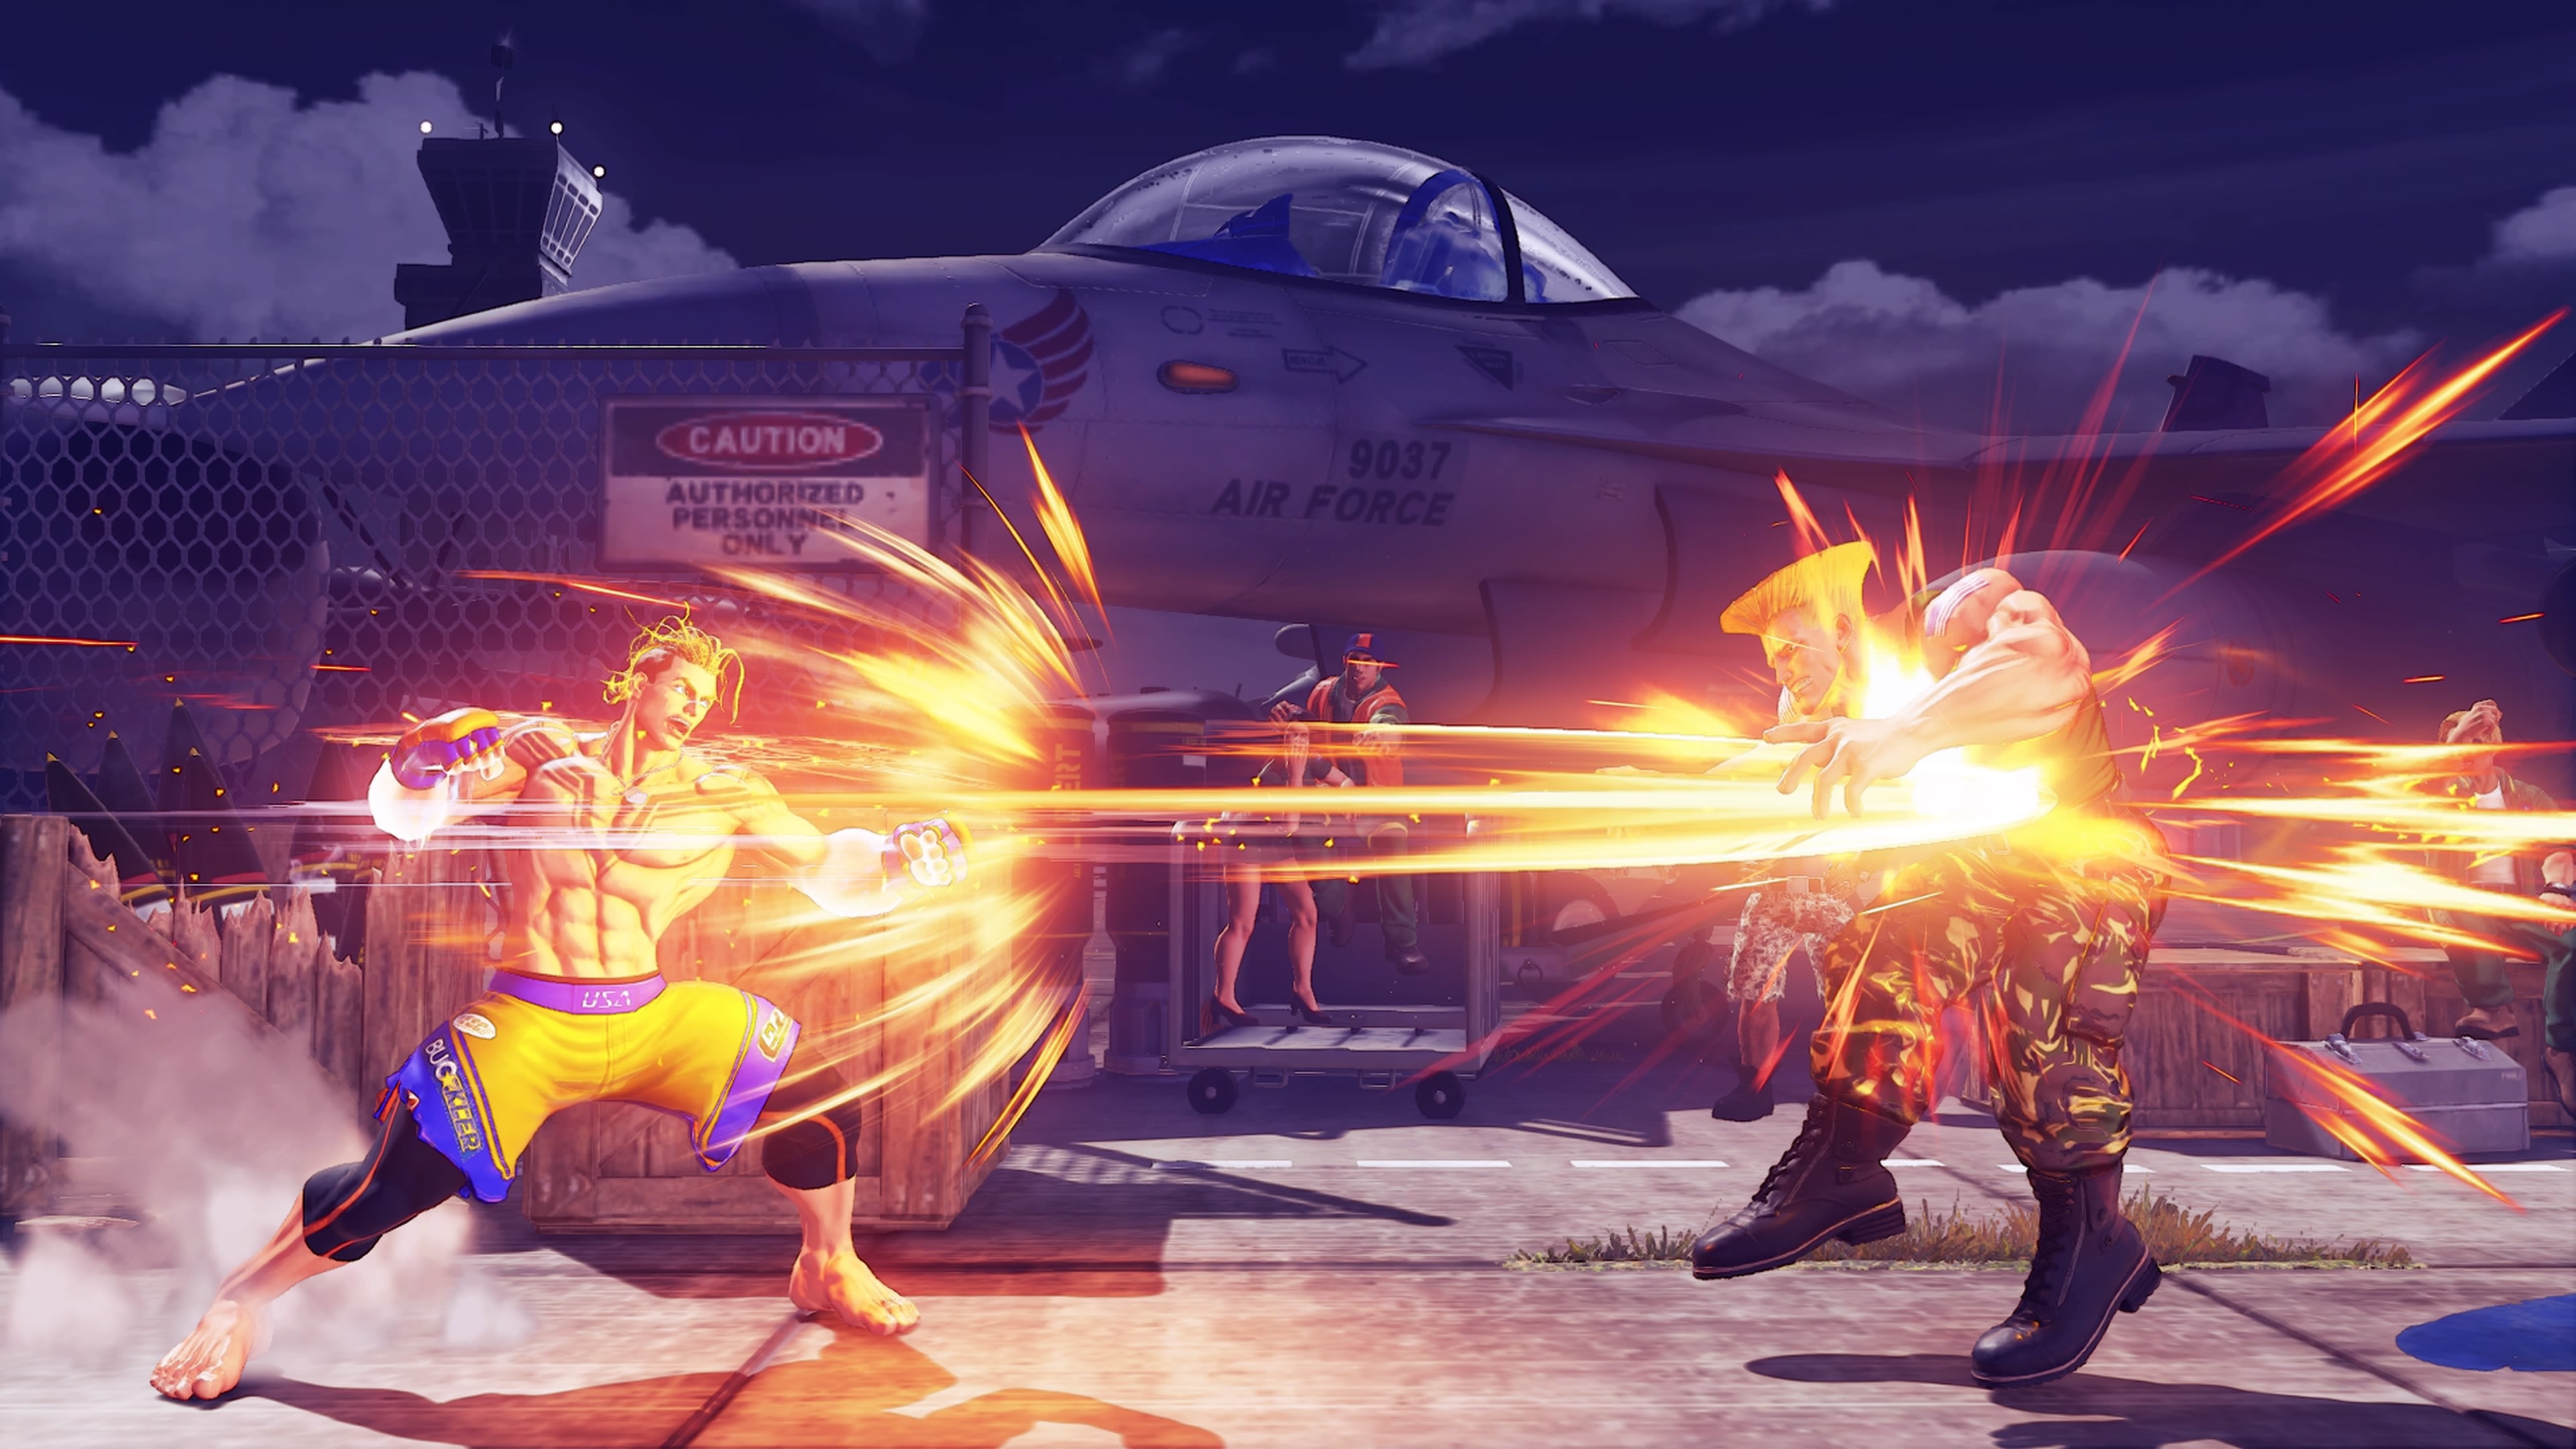 Street Fighter V - Champion Edition Upgrade Kit [Online Game Code